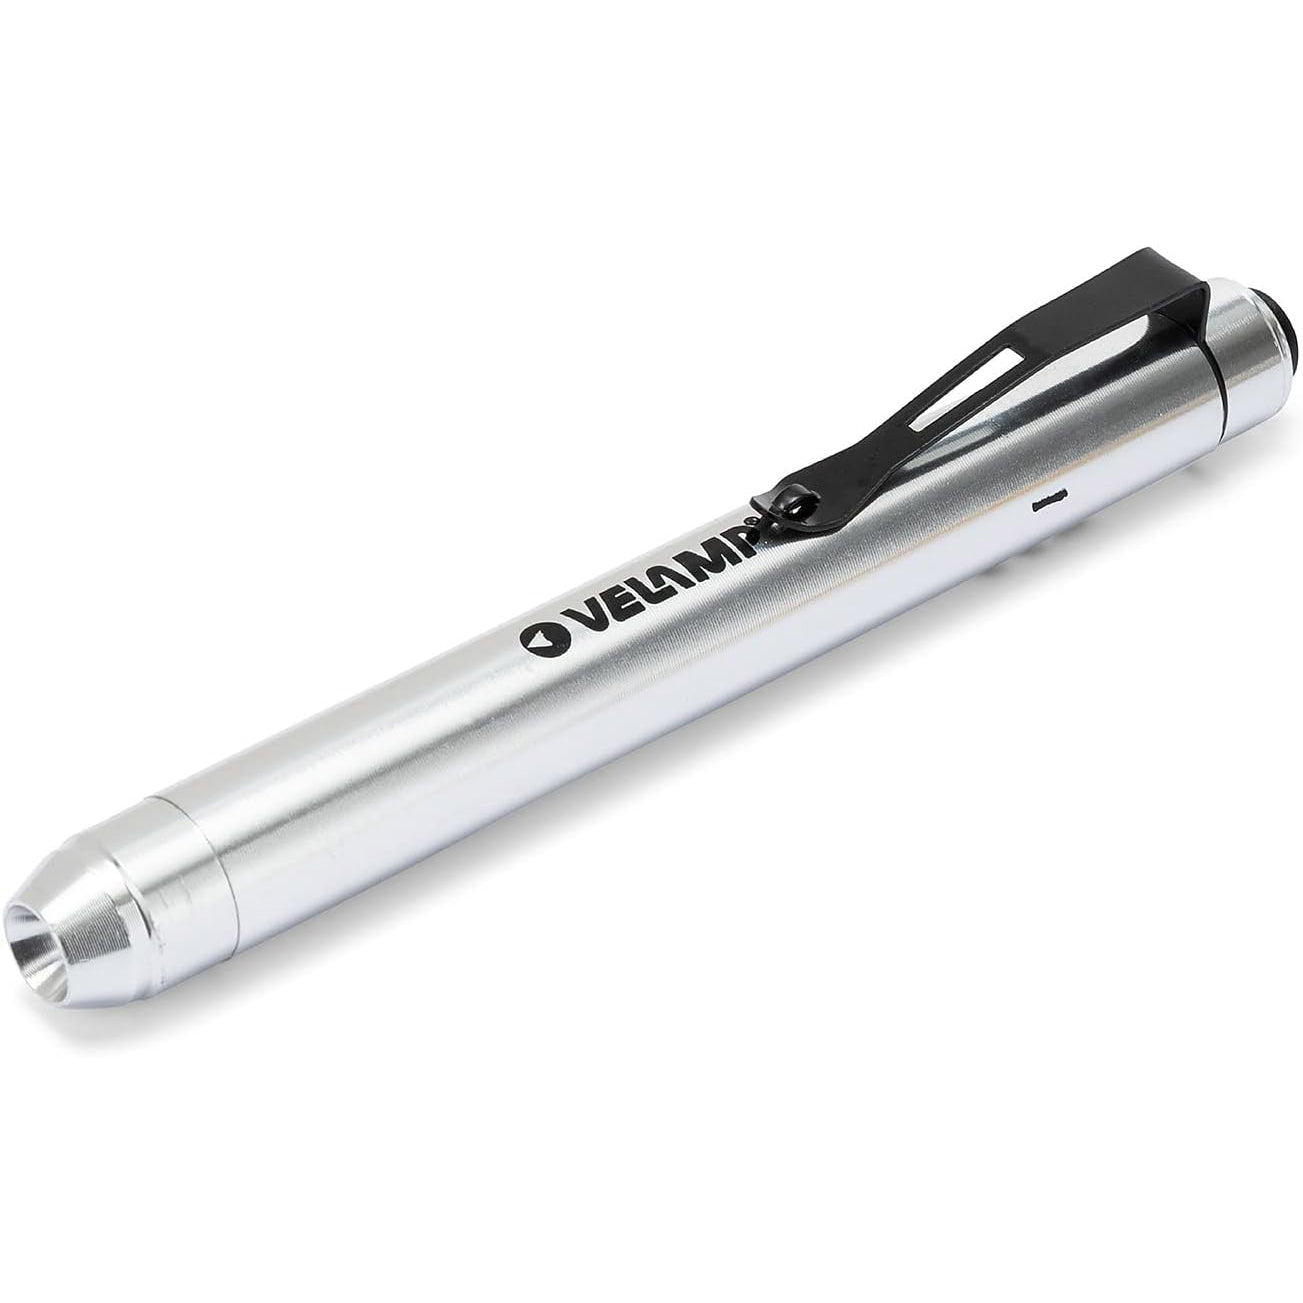 Velamp Torcia penna LED, torcia led tascabile, penna con luce, torcia con fascio focalizzato, per medici ed infermieri